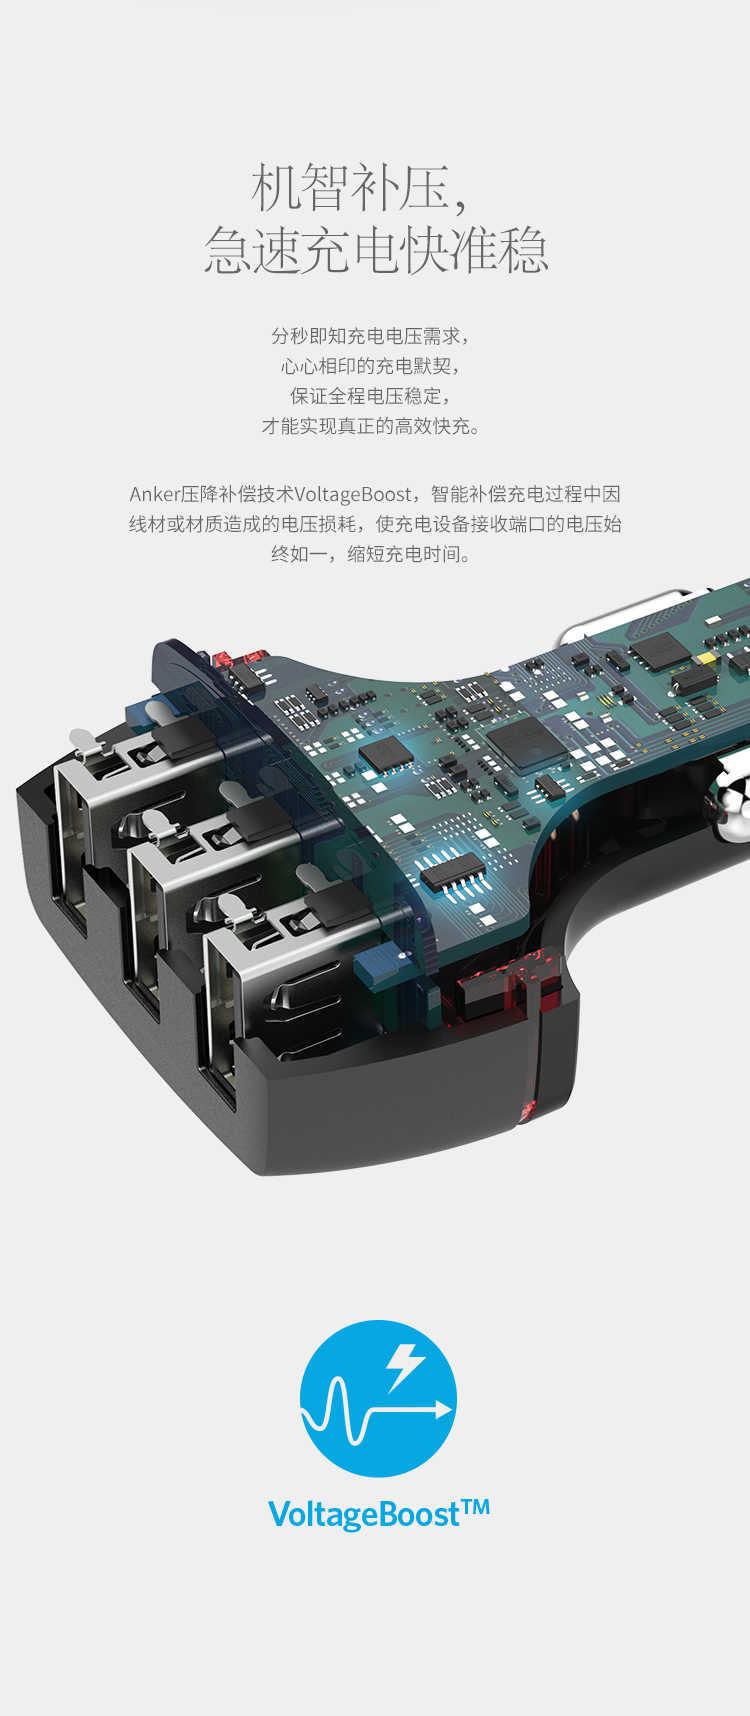 Anker PowerDrive+ 3 車充 三孔USB 36W 搭載POWERIQ設計 智能調節